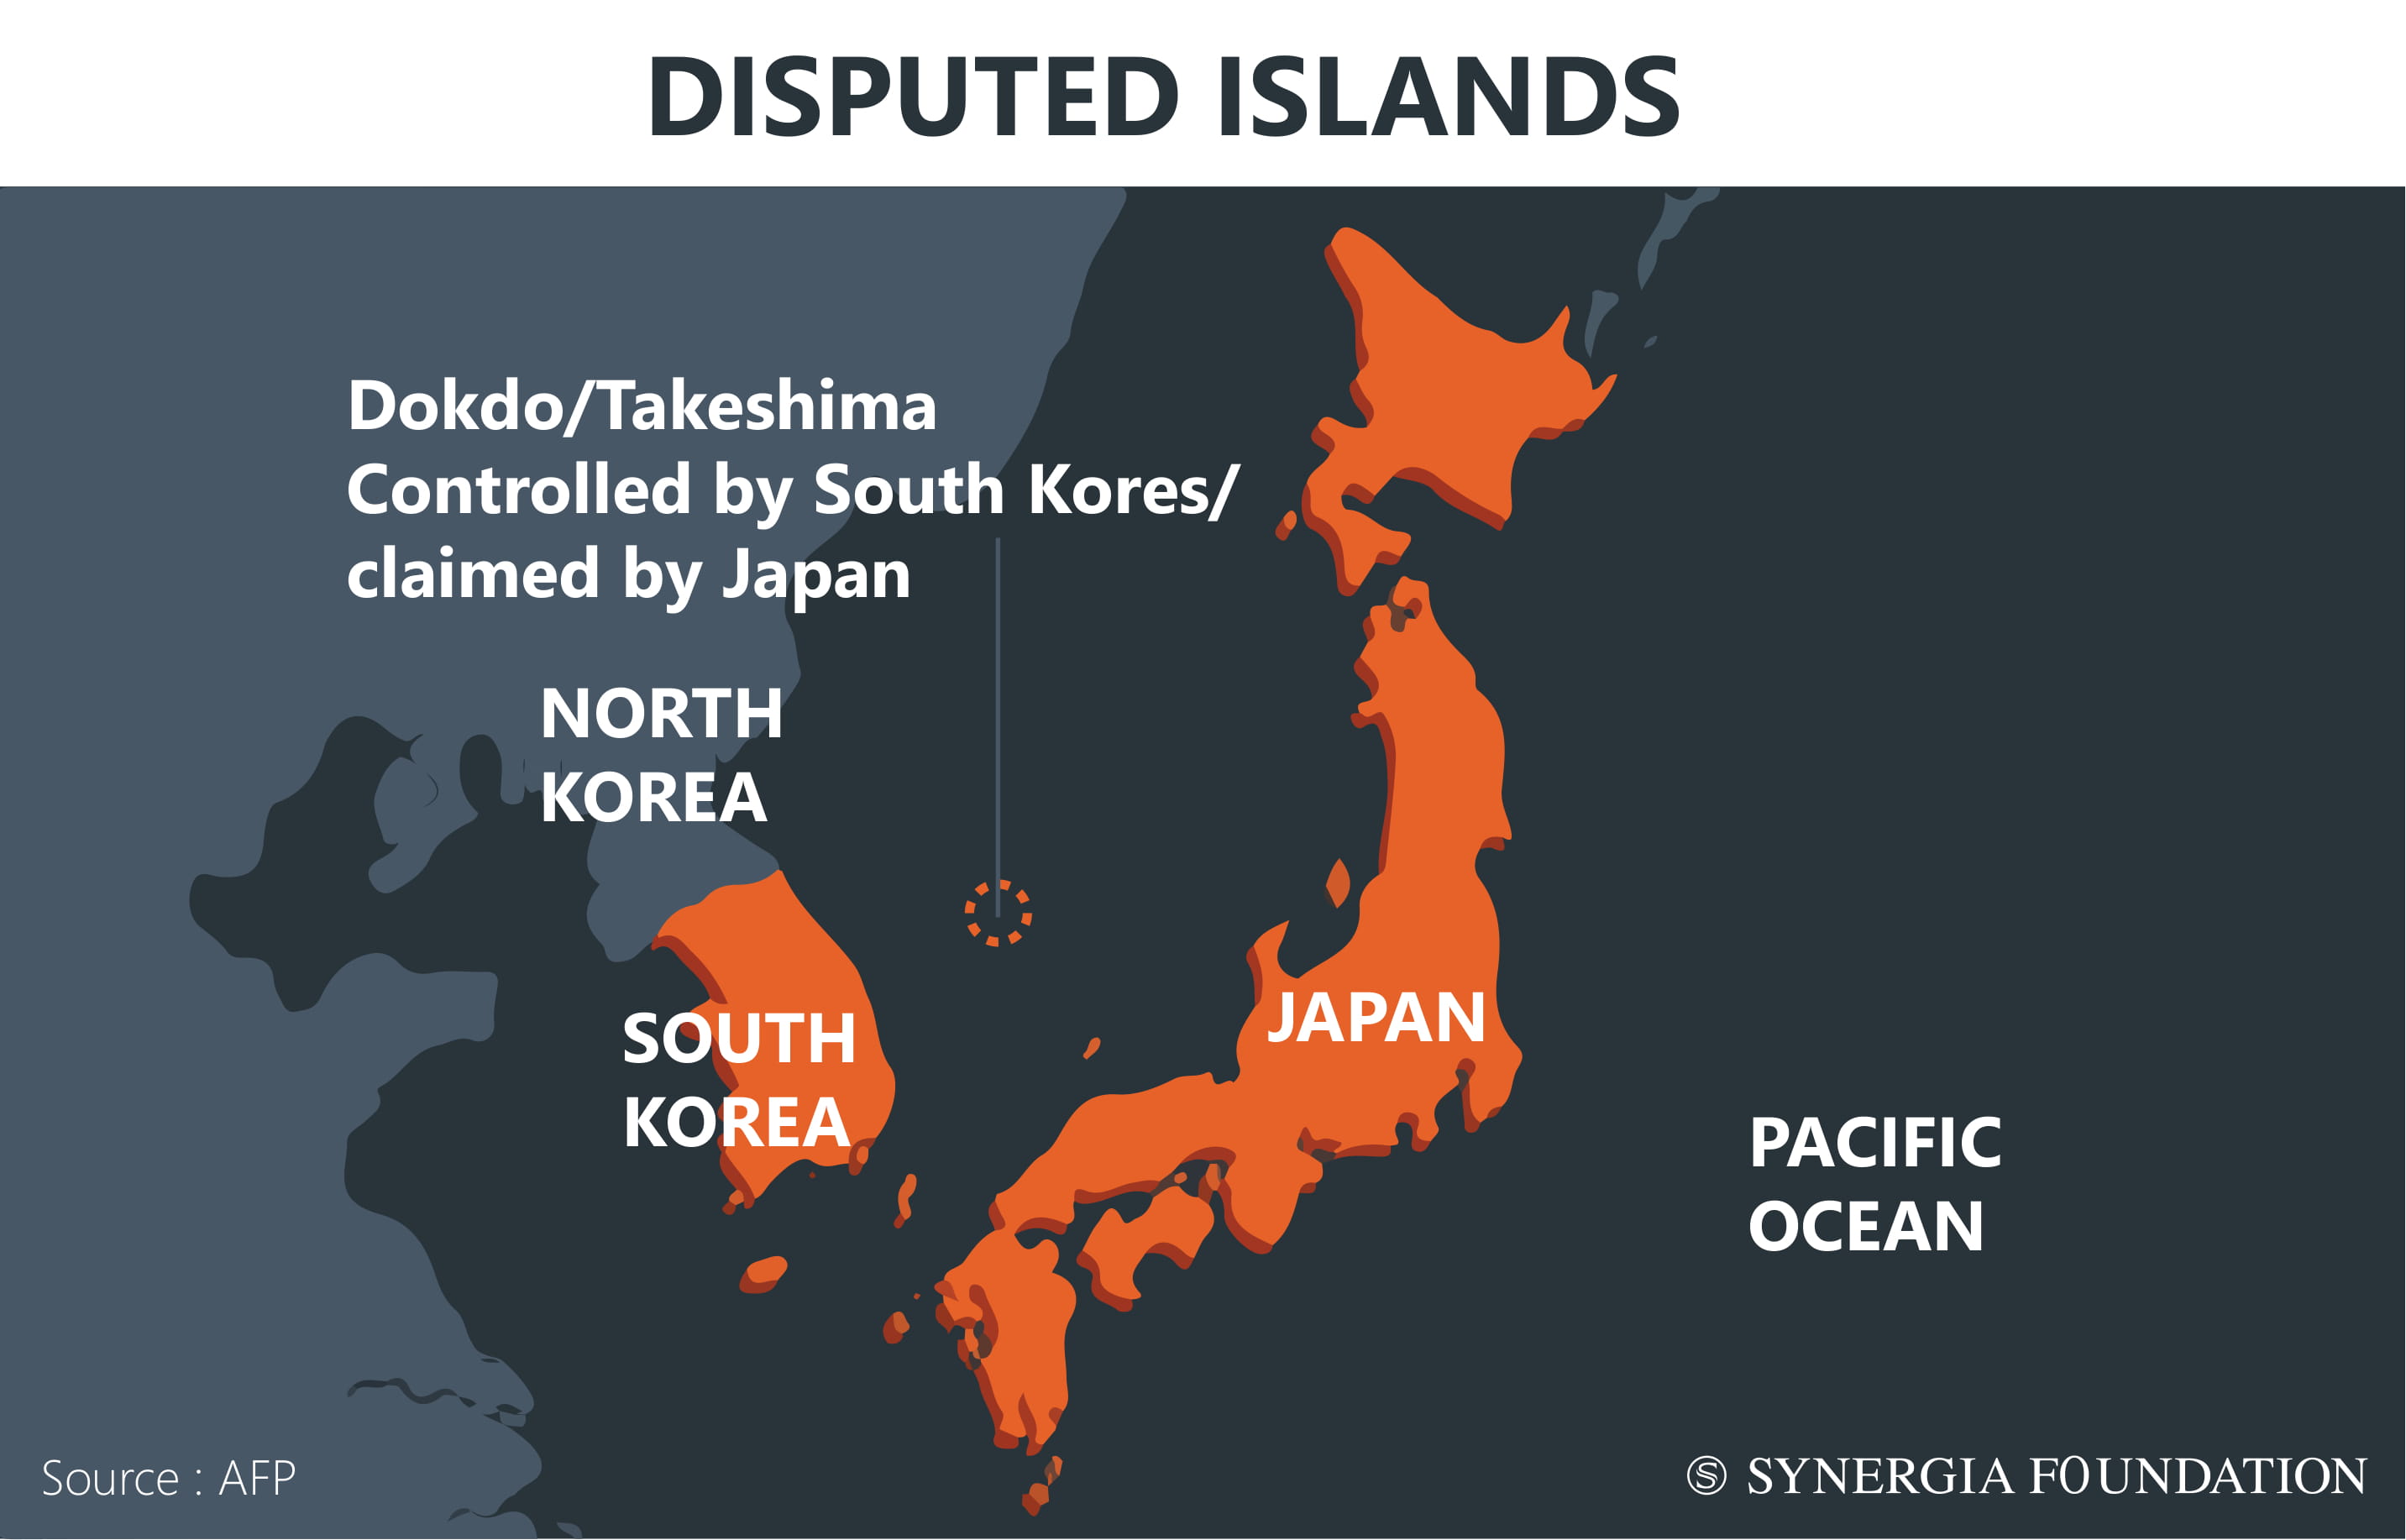 Disputed islands between Japan and South Korea